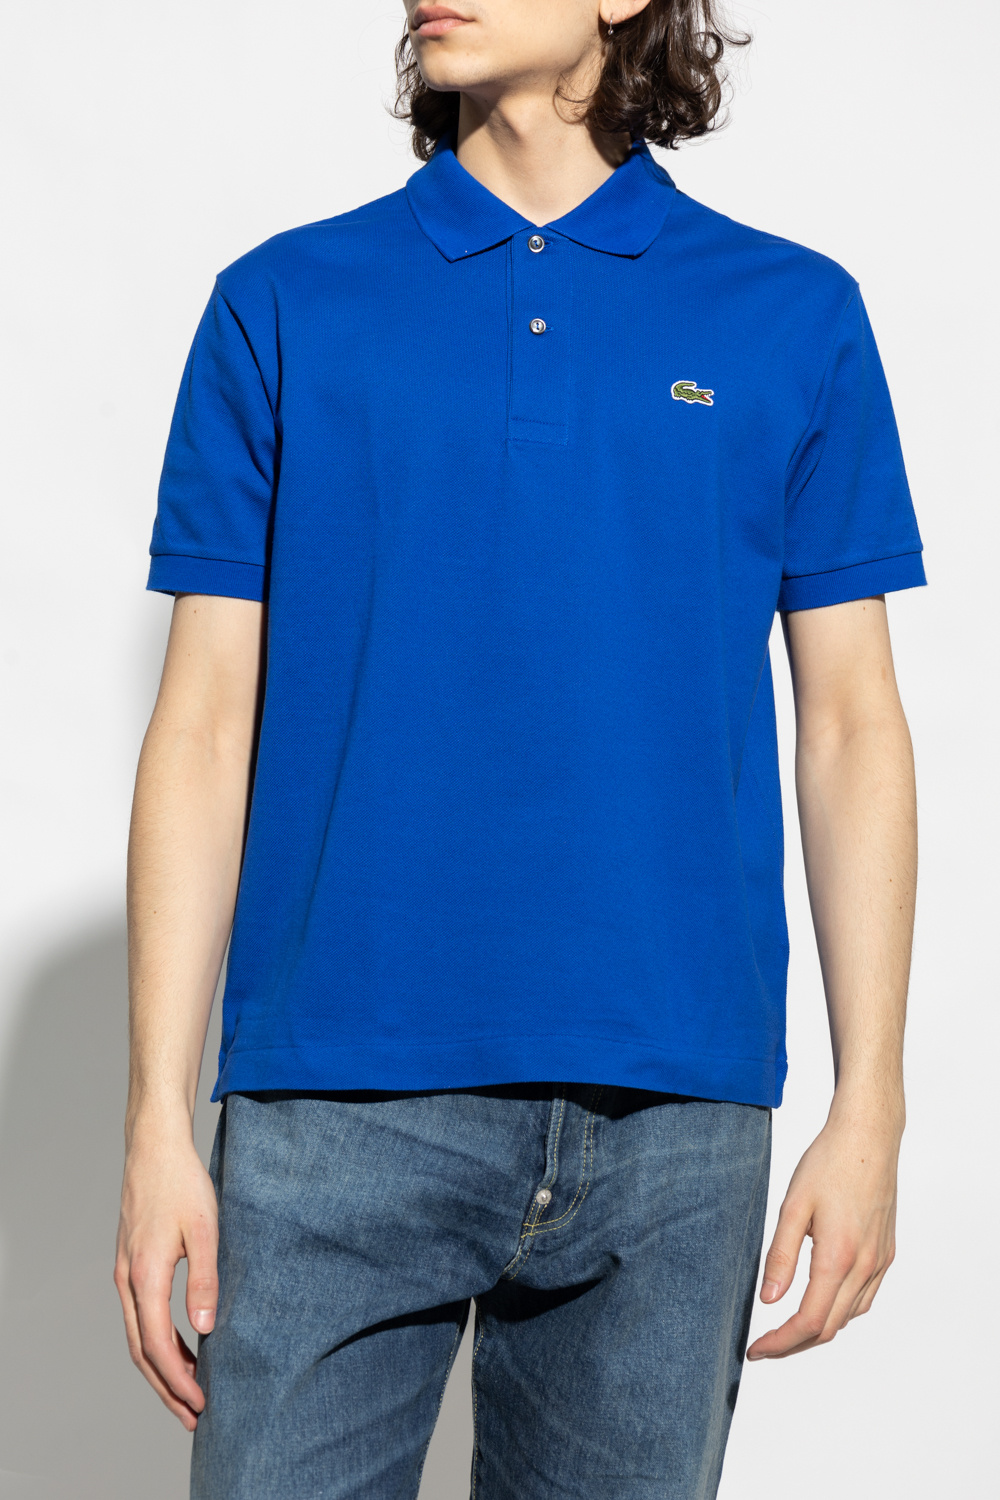 Tap undskylde kopi IetpShops Morocco - trim polo shirt Lacoste - clothing Kids eyewear polo-shirts  - Blue Icon Stripe